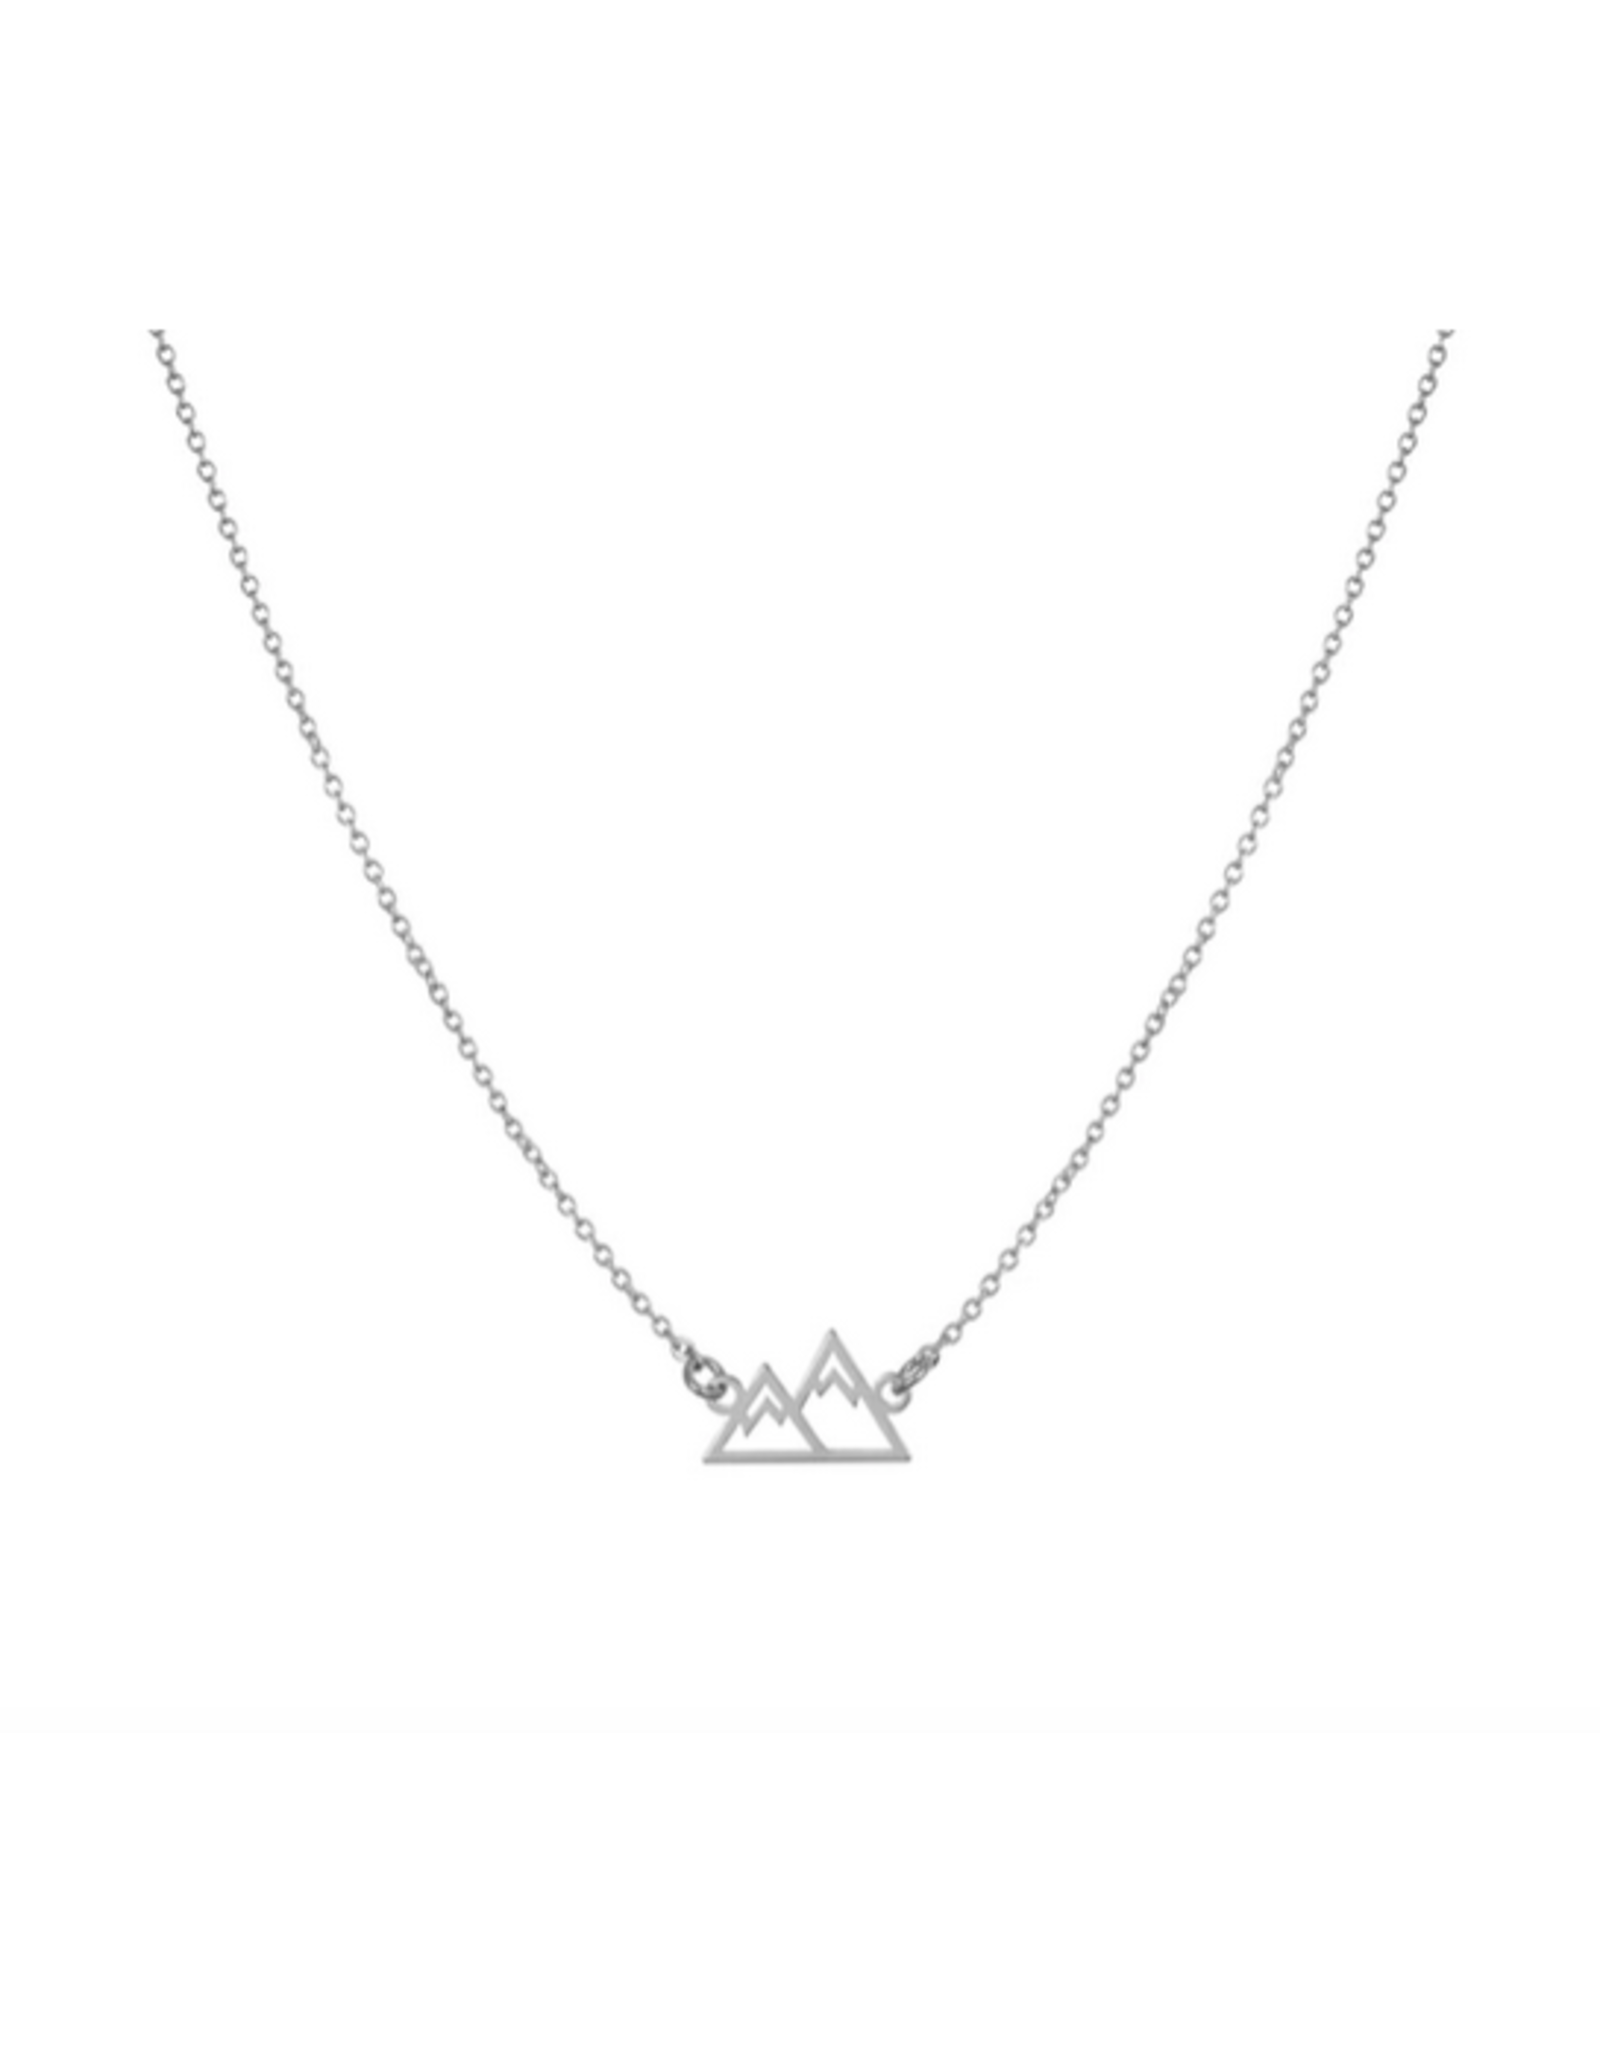 Small Mountain Necklace - Silver